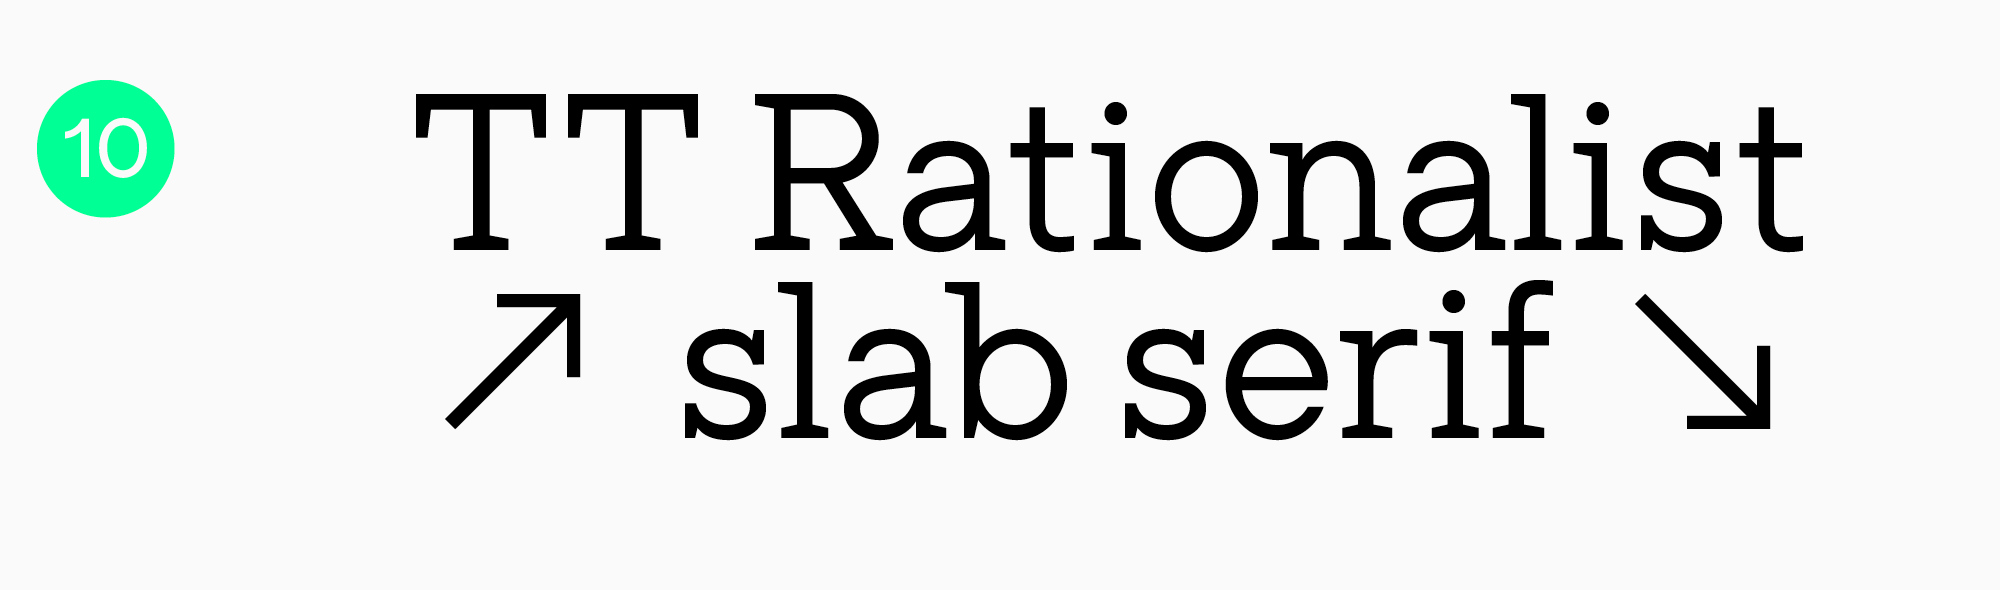 Best slab-serif fonts for logo TT Rationalist